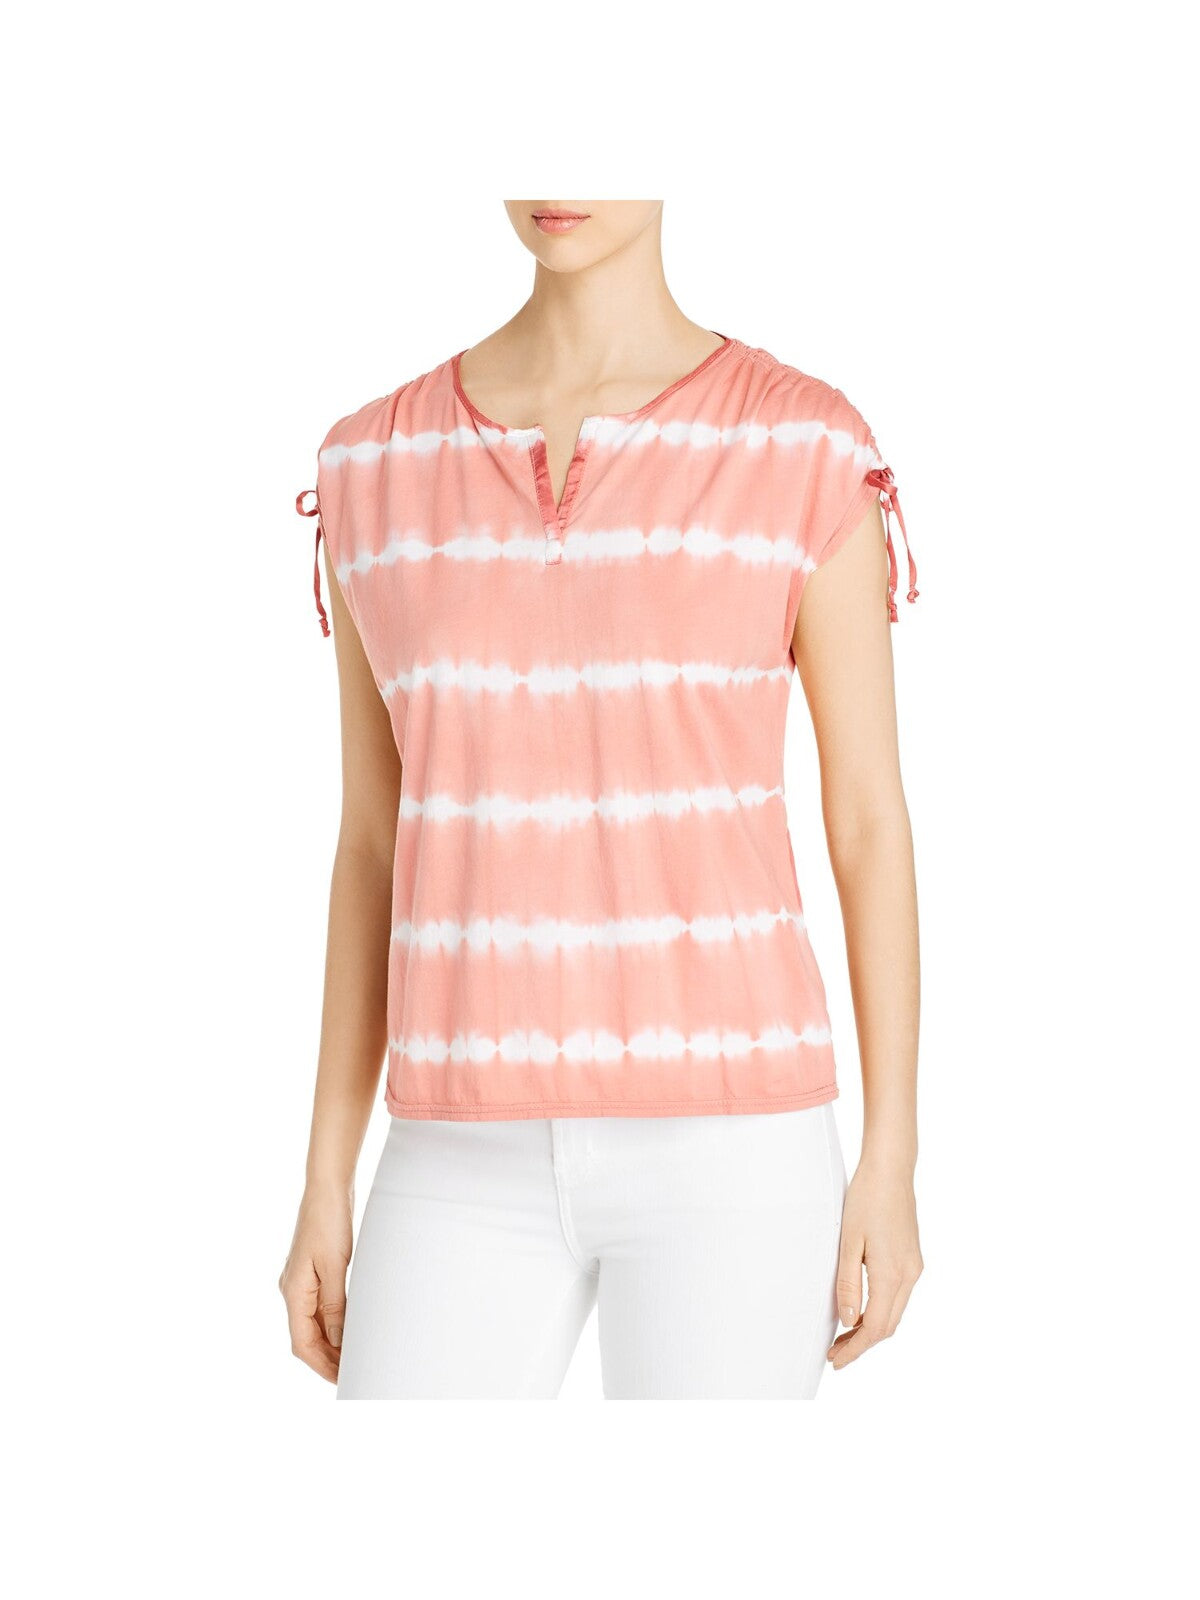 XCVI Womens Pink Tie Tie Dye T-Shirt XL